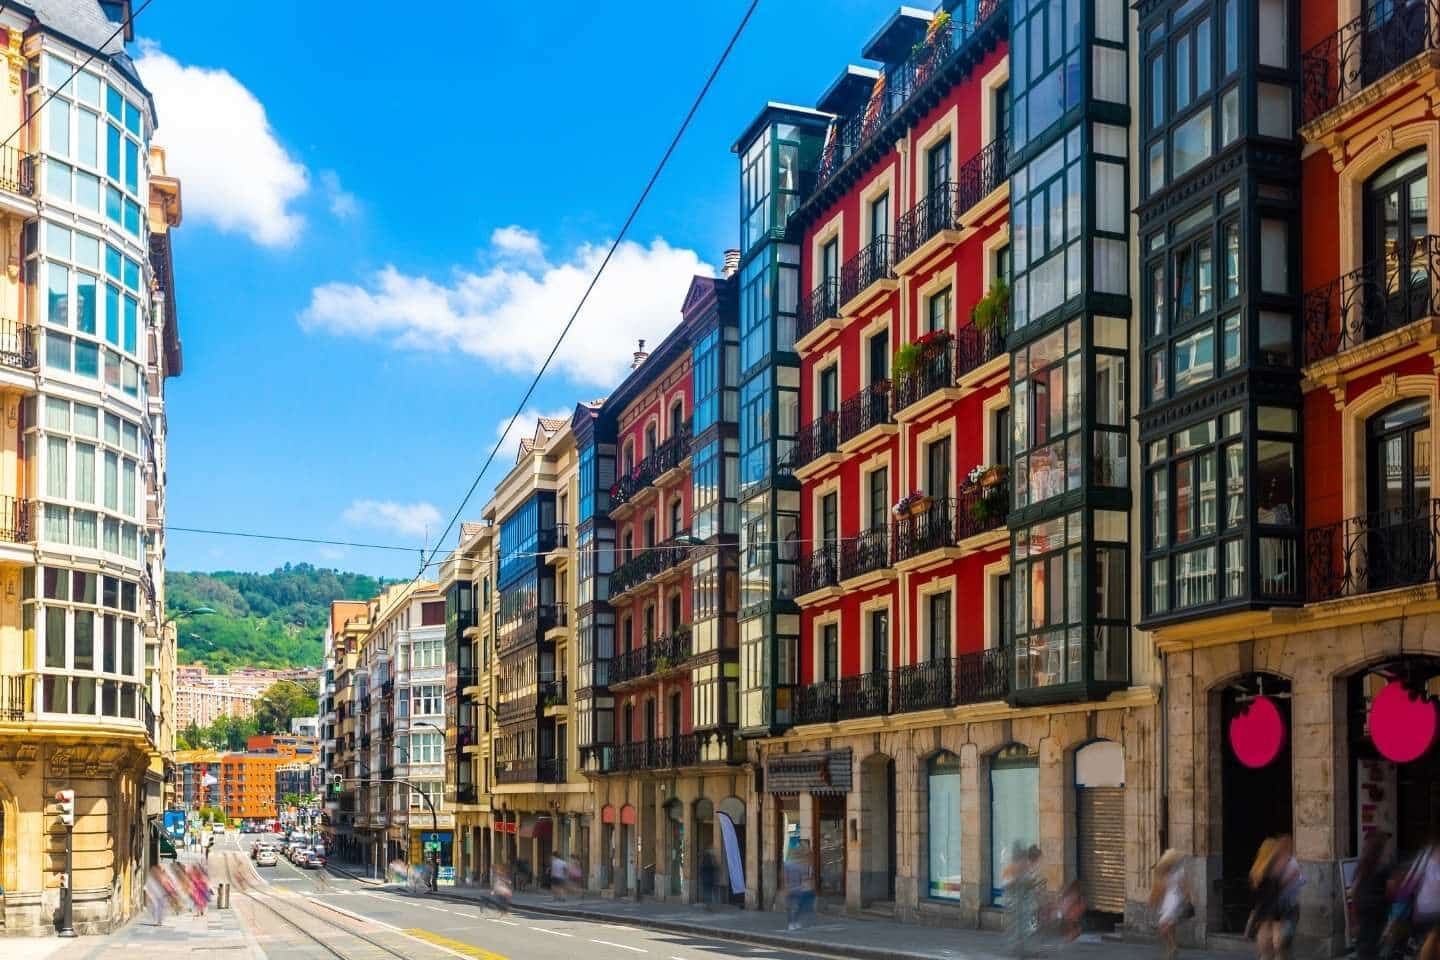 Streets of Casco Viejo Bilbao